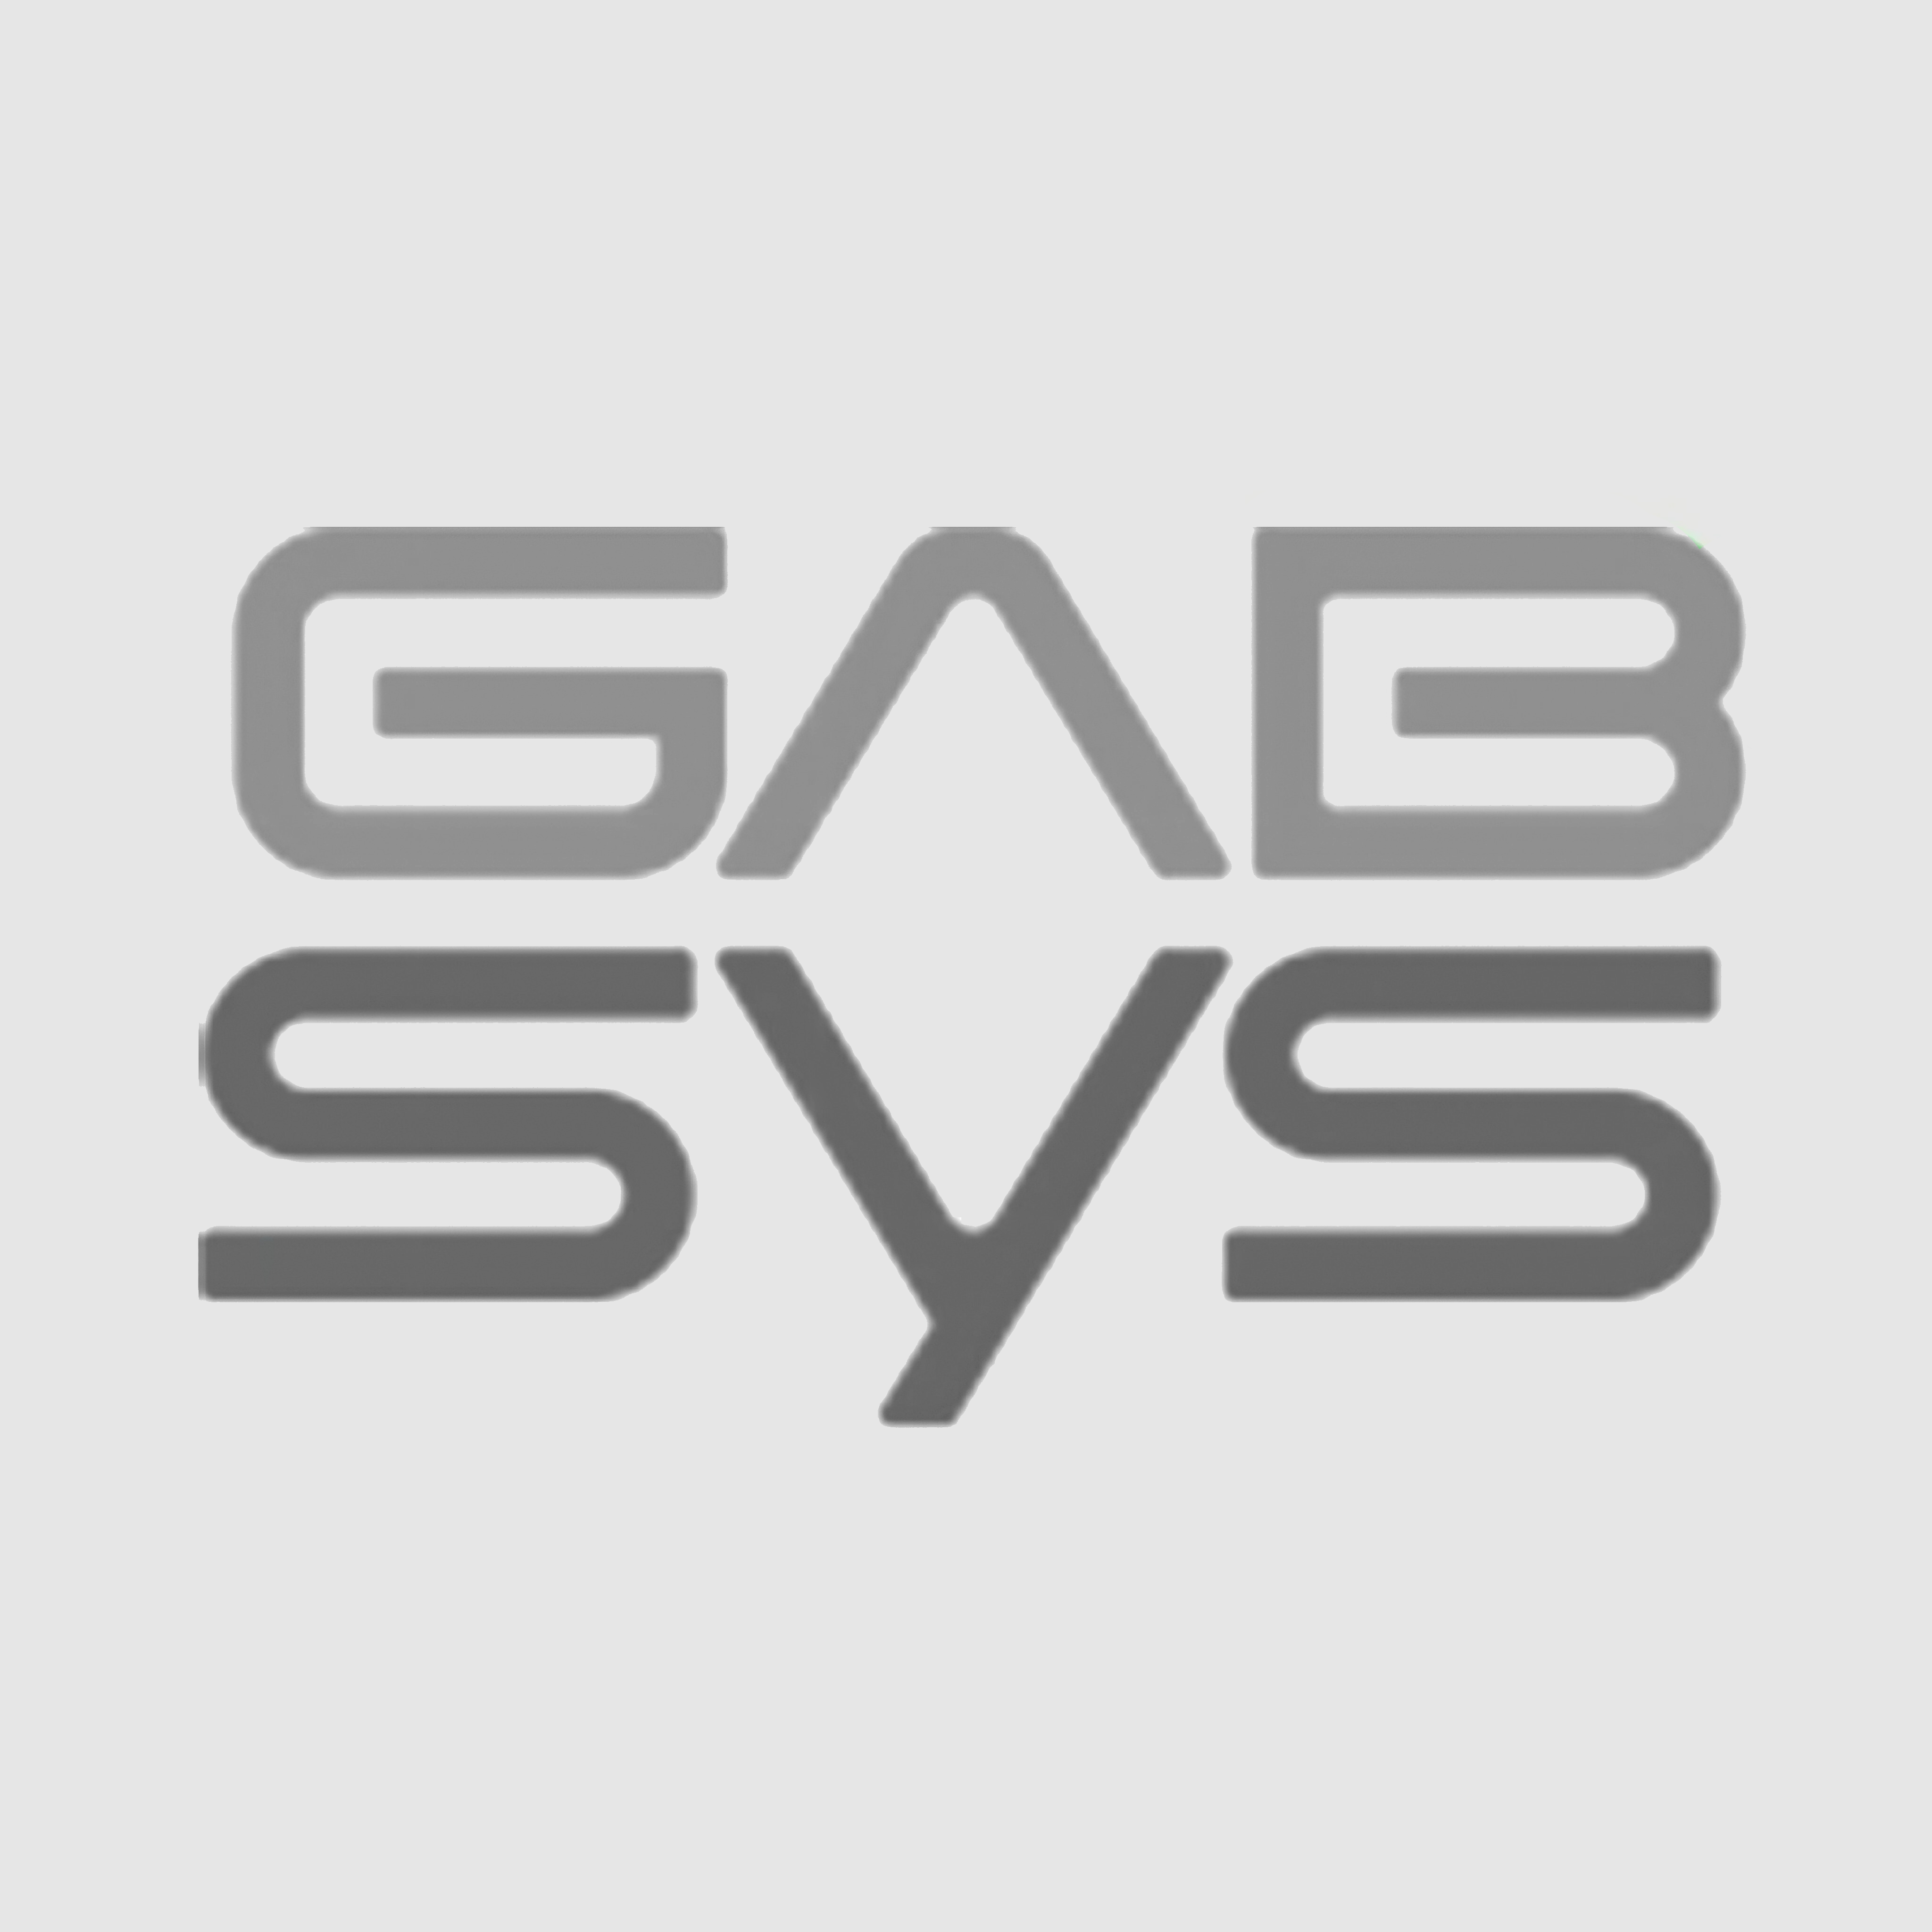 650-gabsys-grey.png